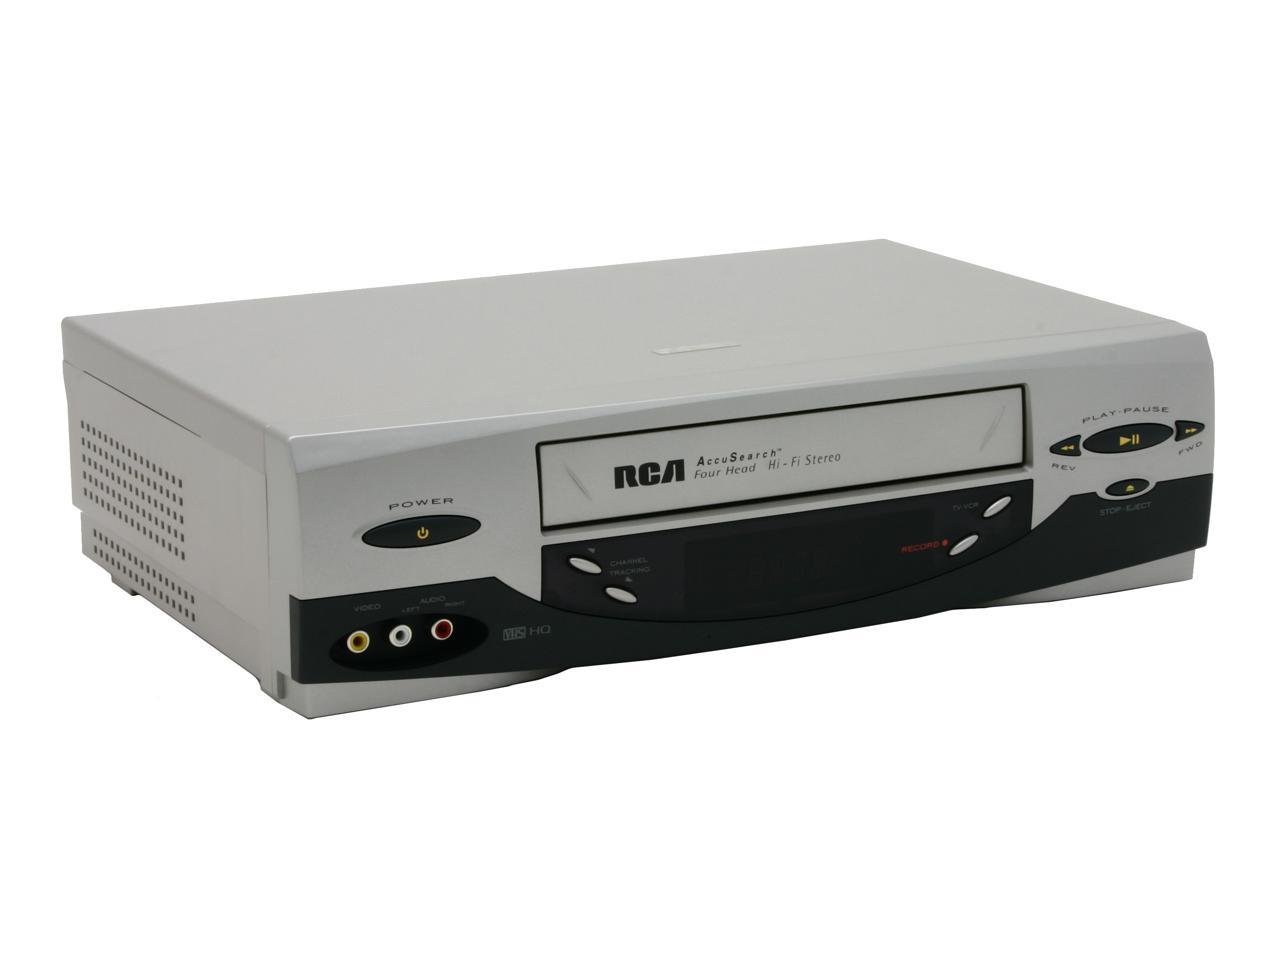 RCA VR651HF 4-Head Hi-Fi VCR 